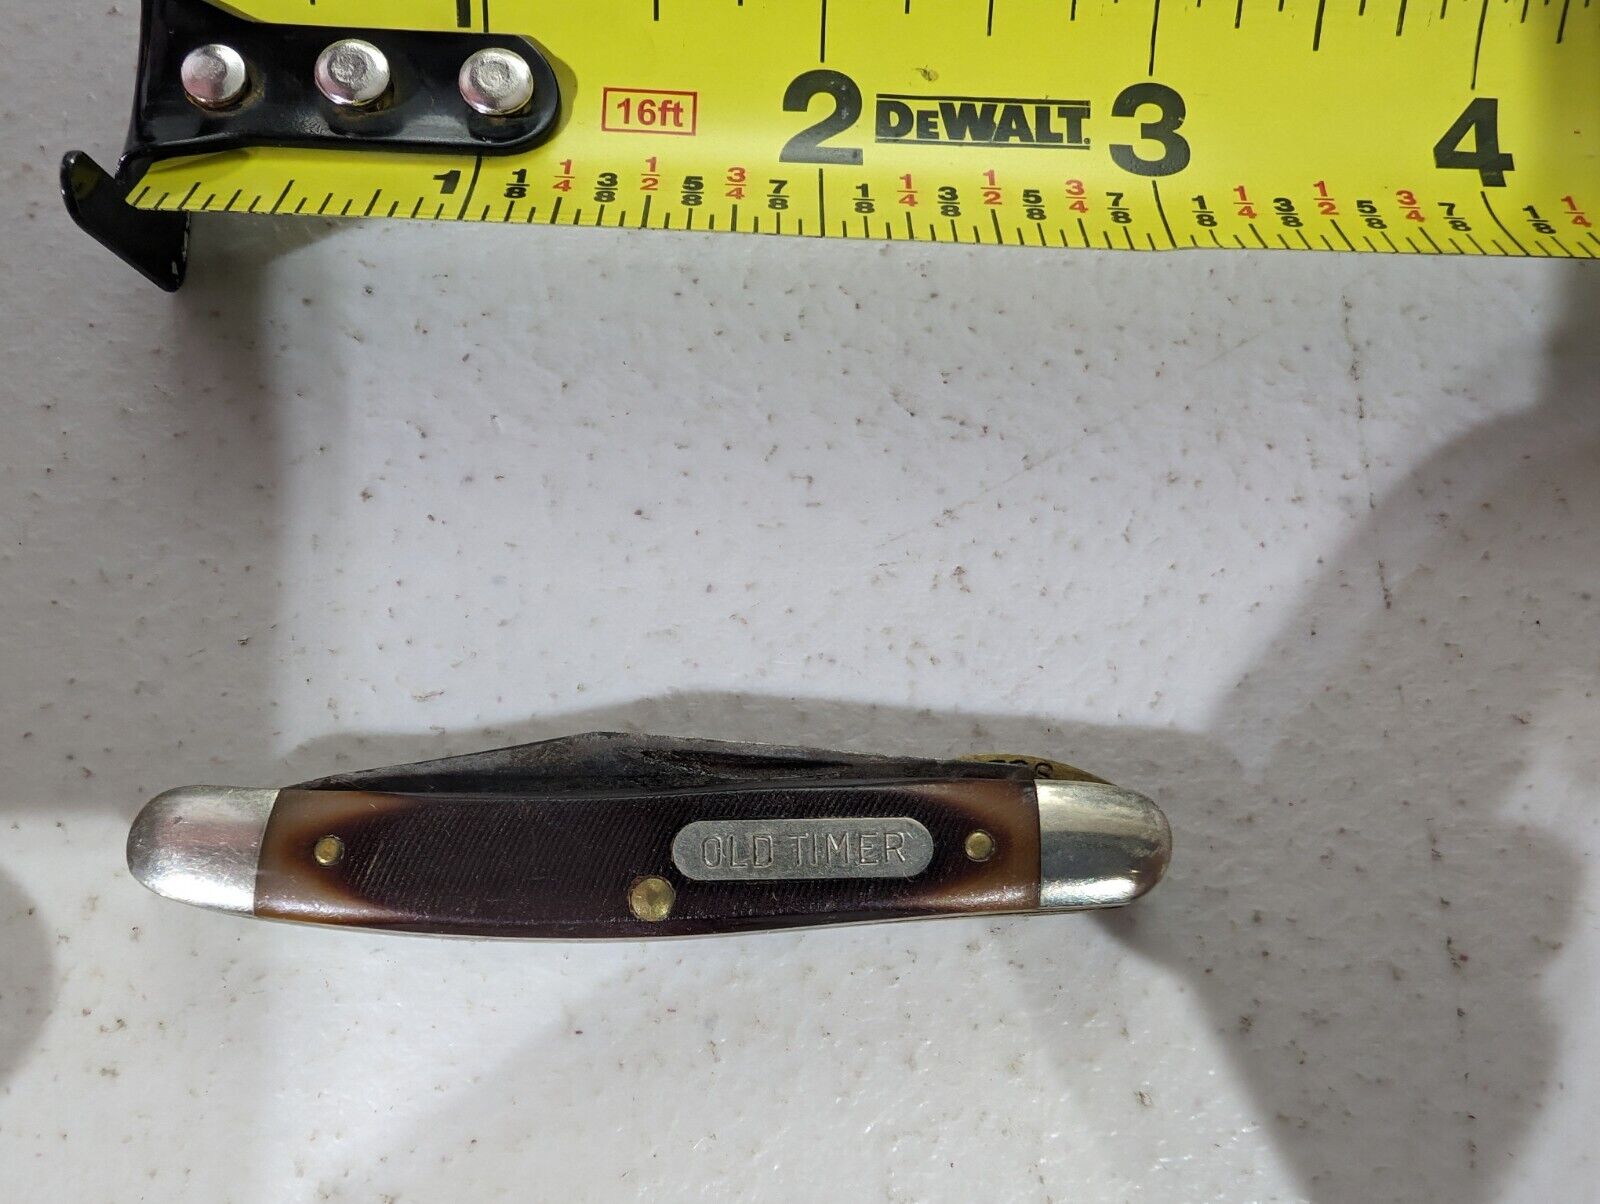 AUTHENTIC SCHRADE OLD TIMER SINGLE BLADE FOLDING LOCKING POCKET KNIFE 